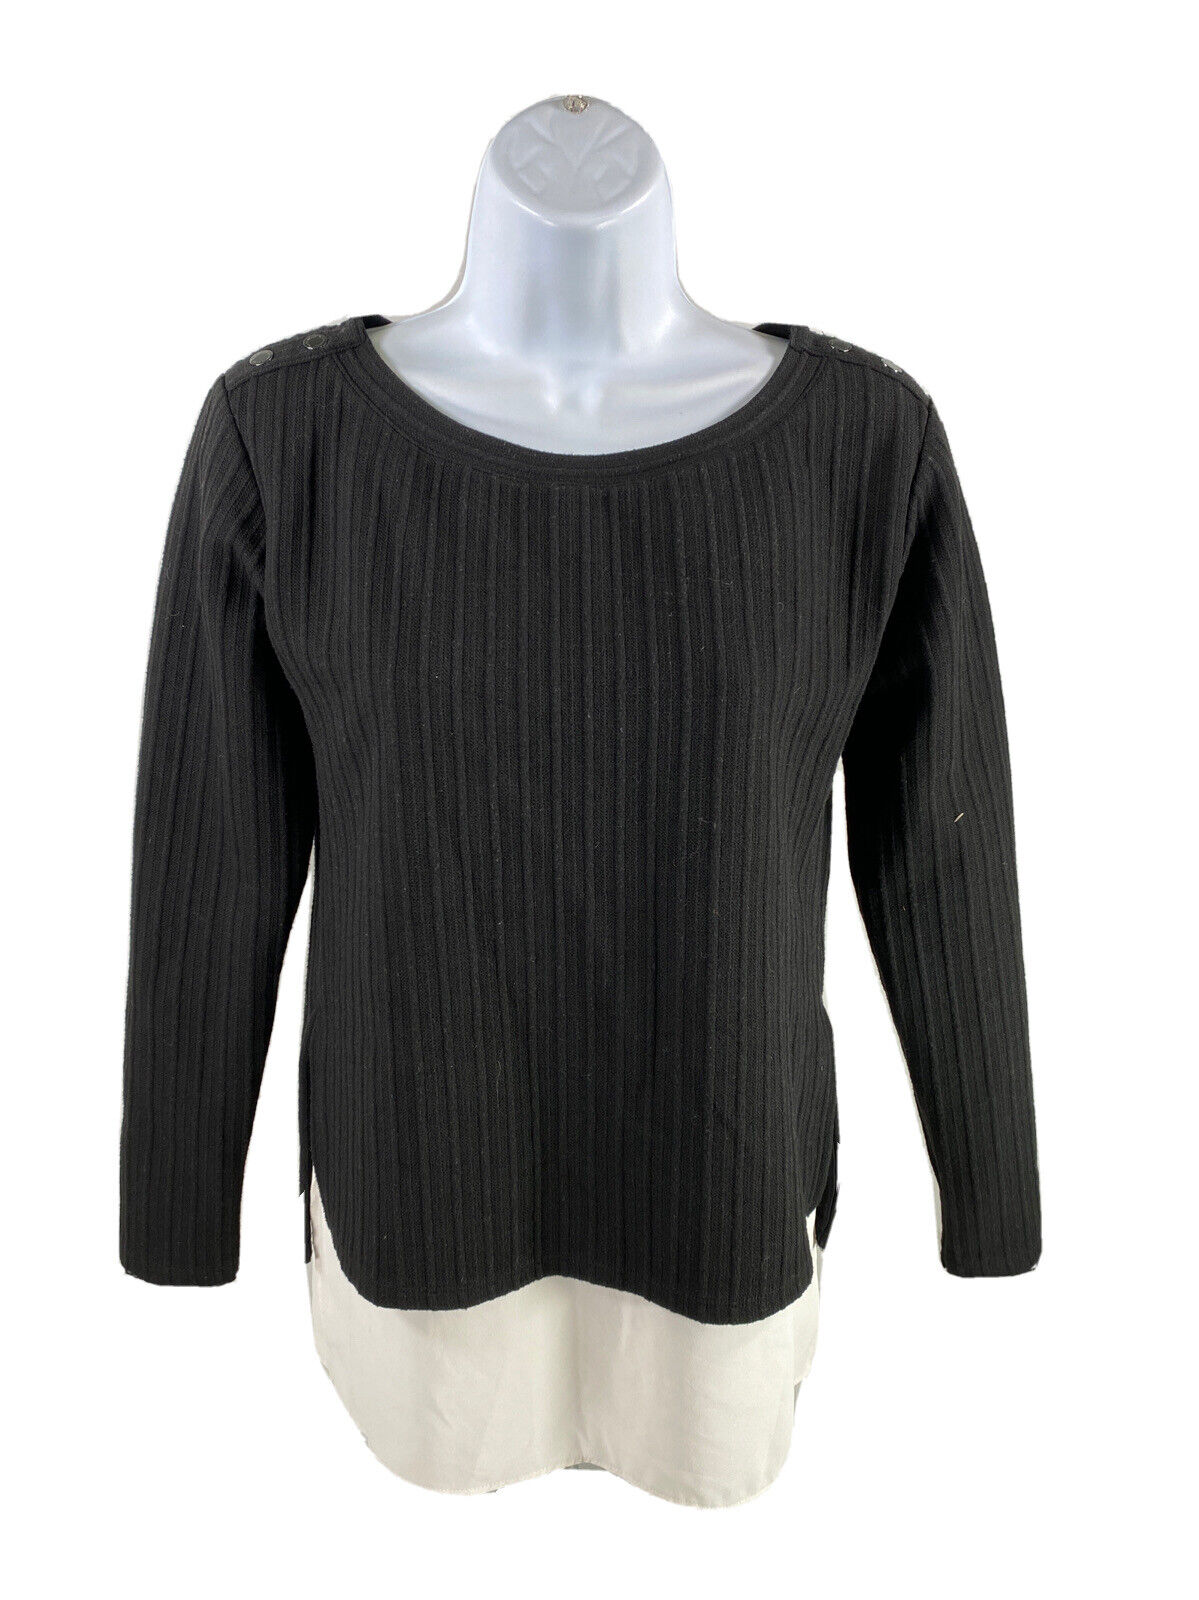 White House Black Market Women's Black Layered Long Sleeve Sweater - XS